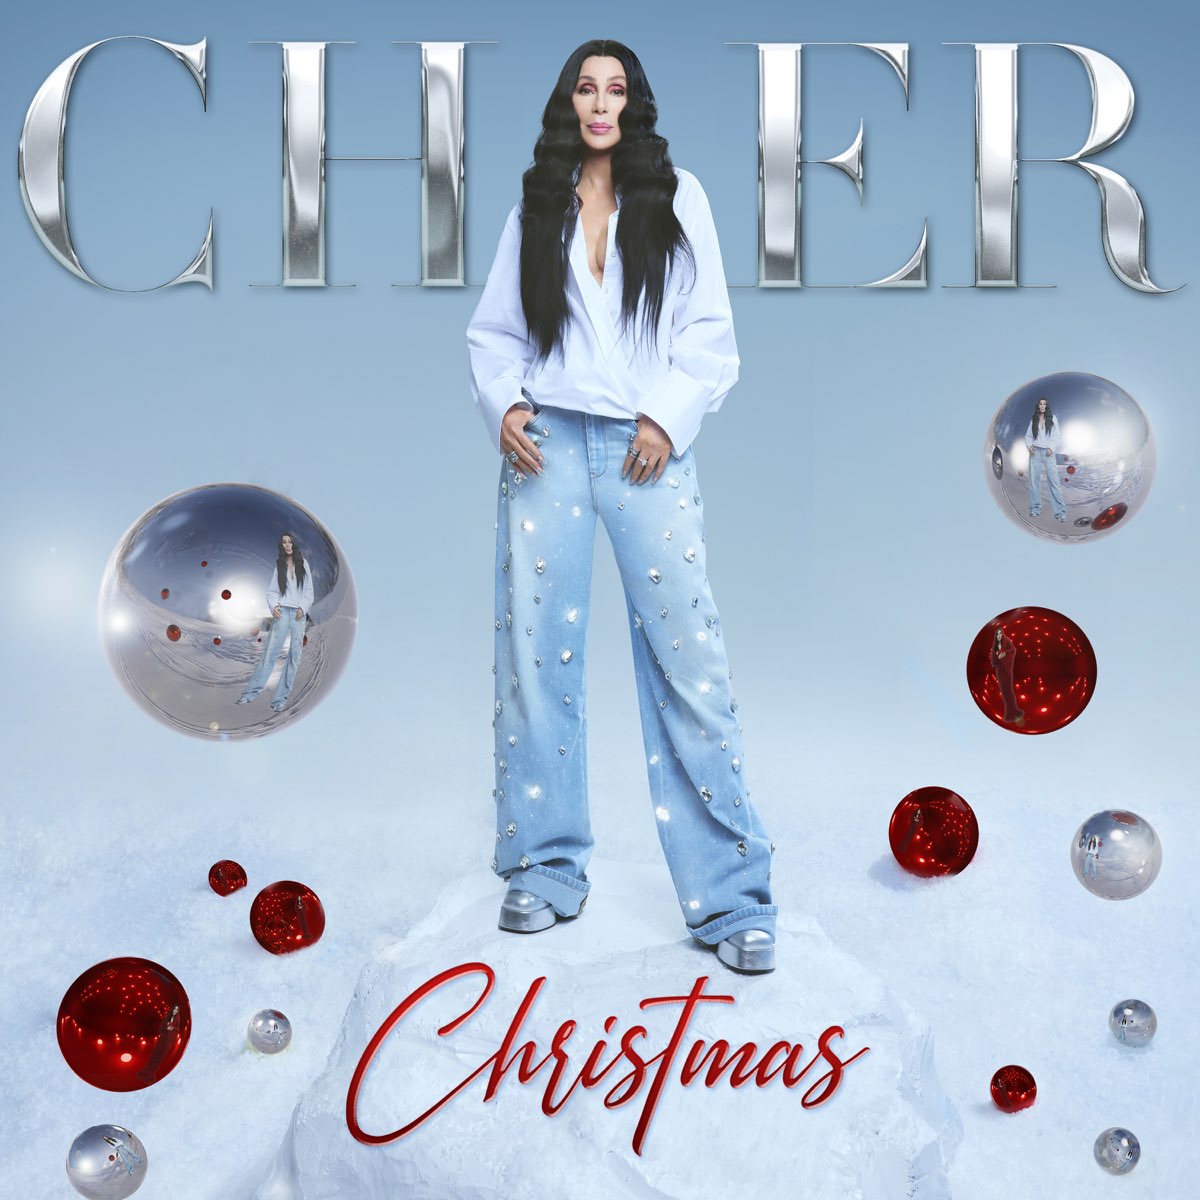 ‎Christmas Album van Cher Apple Music